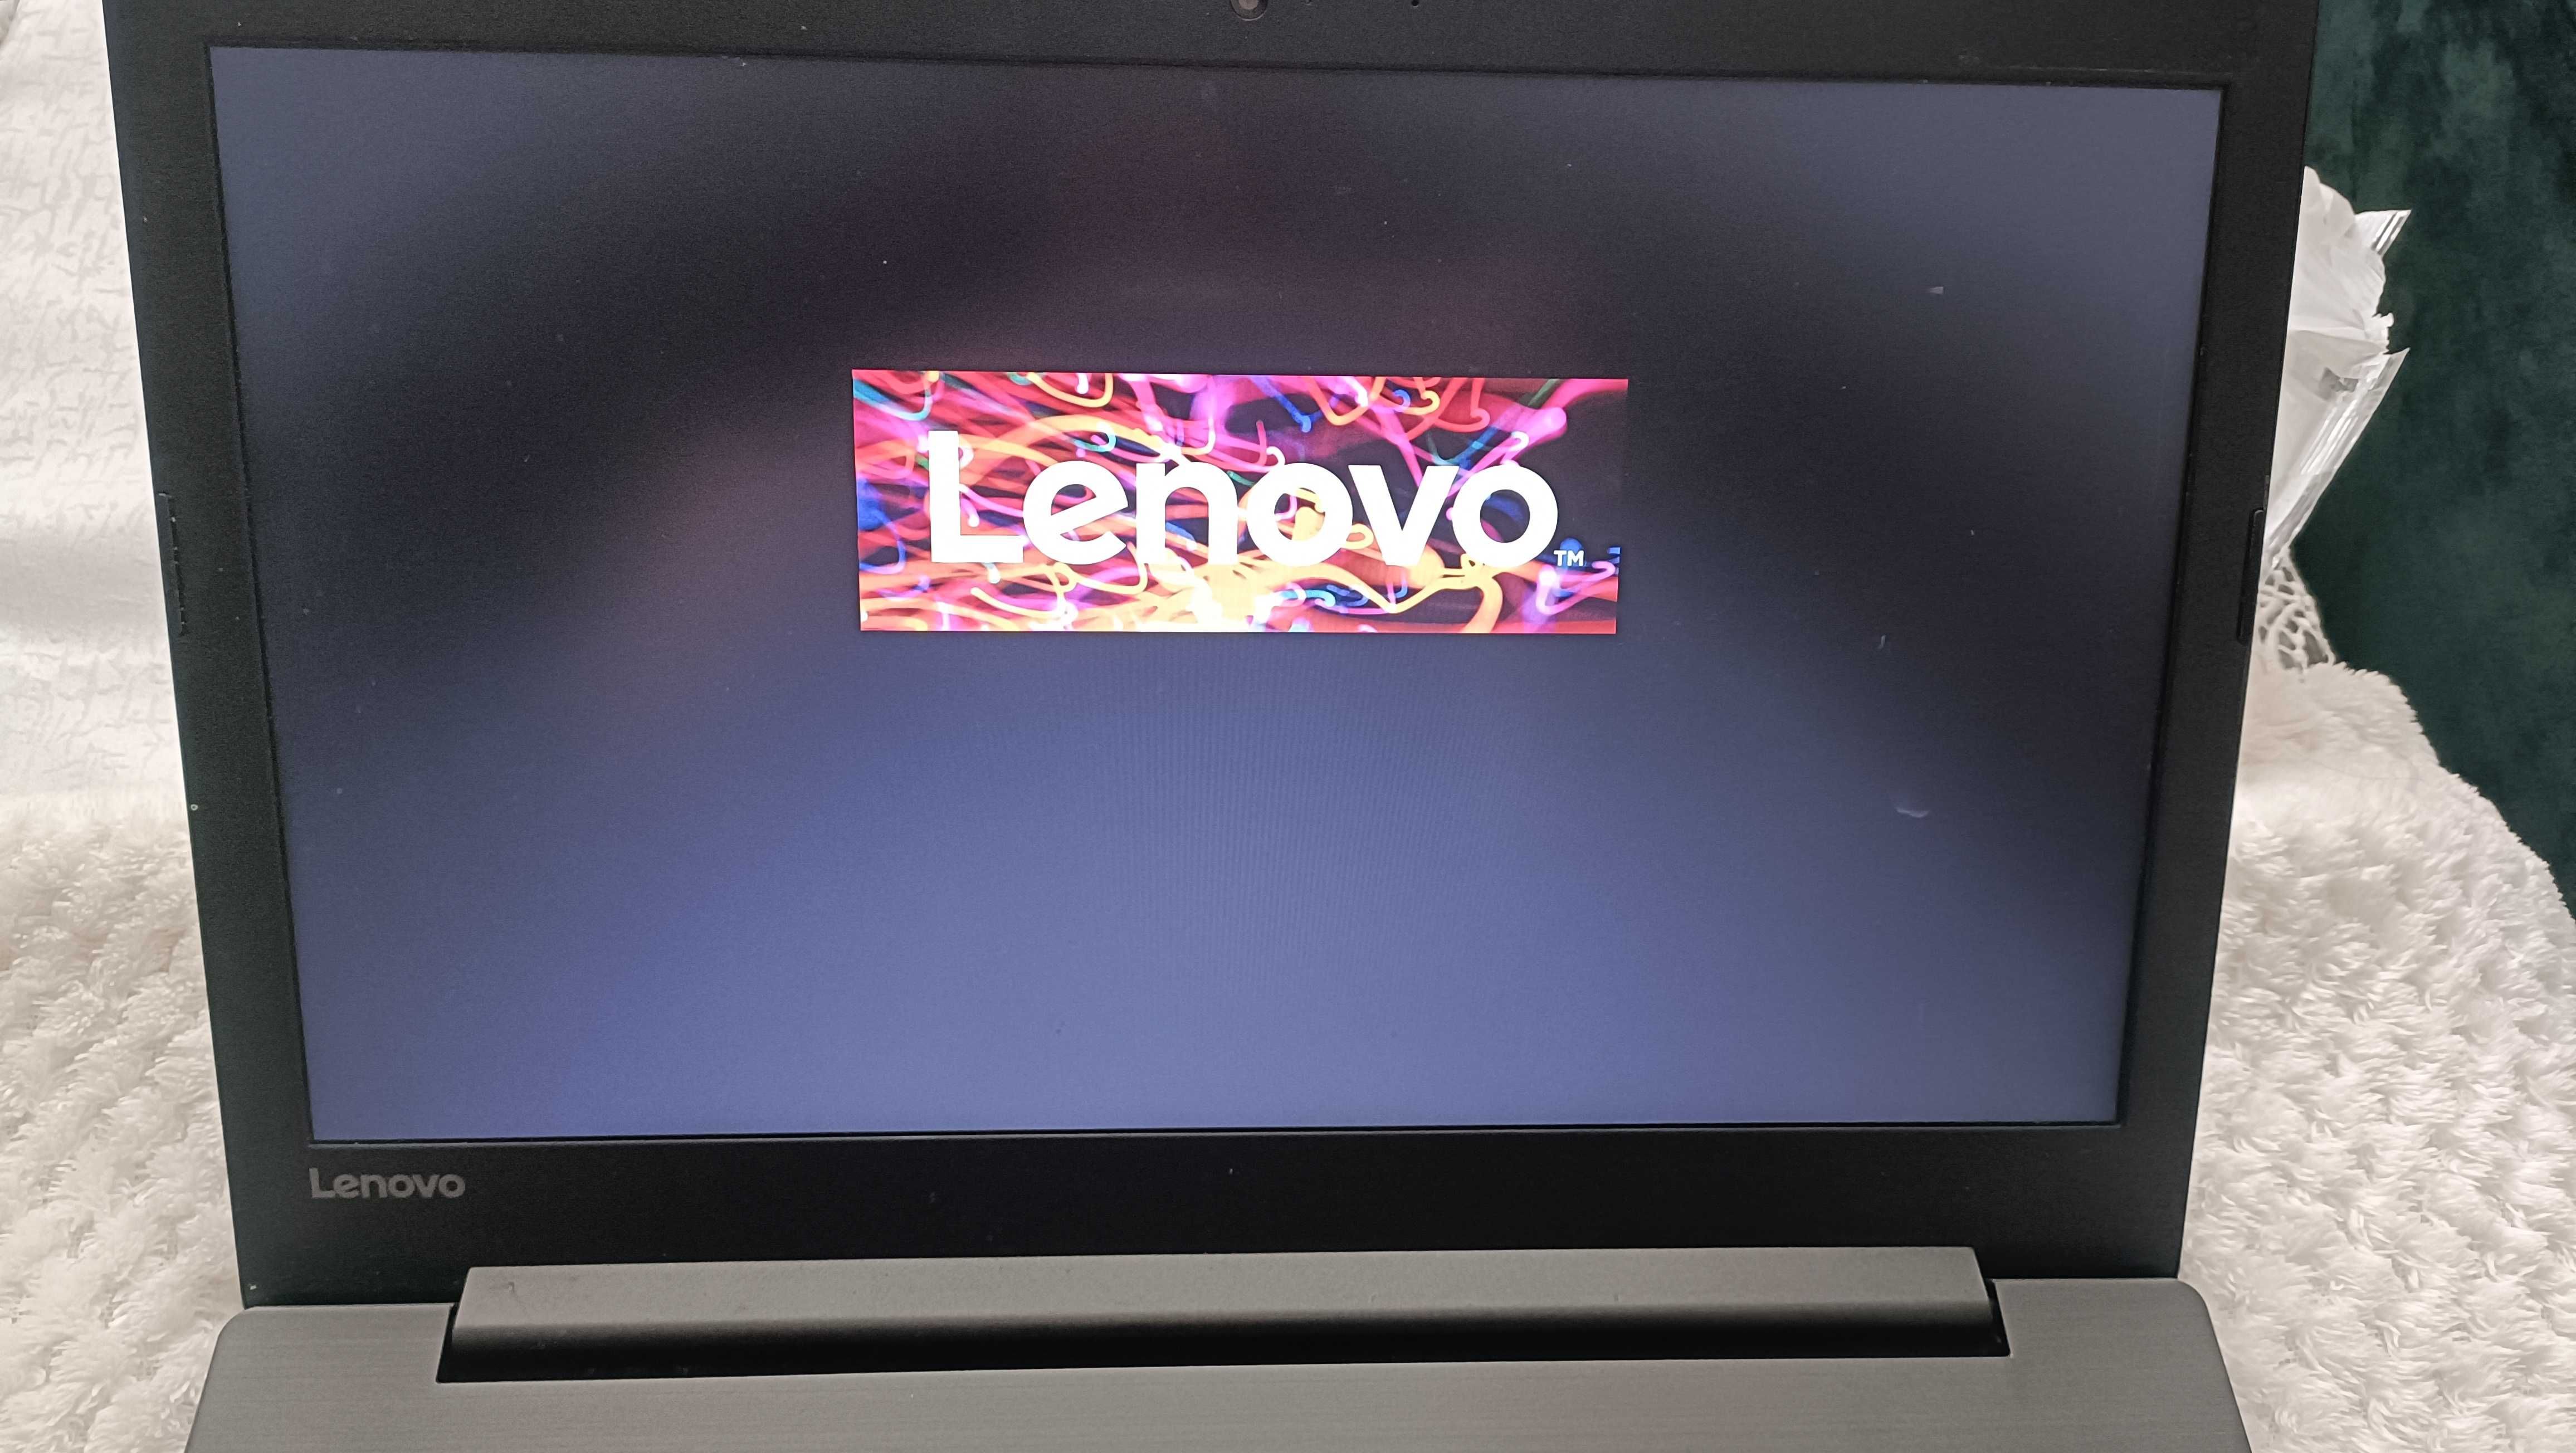 Laptop Lenovo Ideapad 320-15IKB